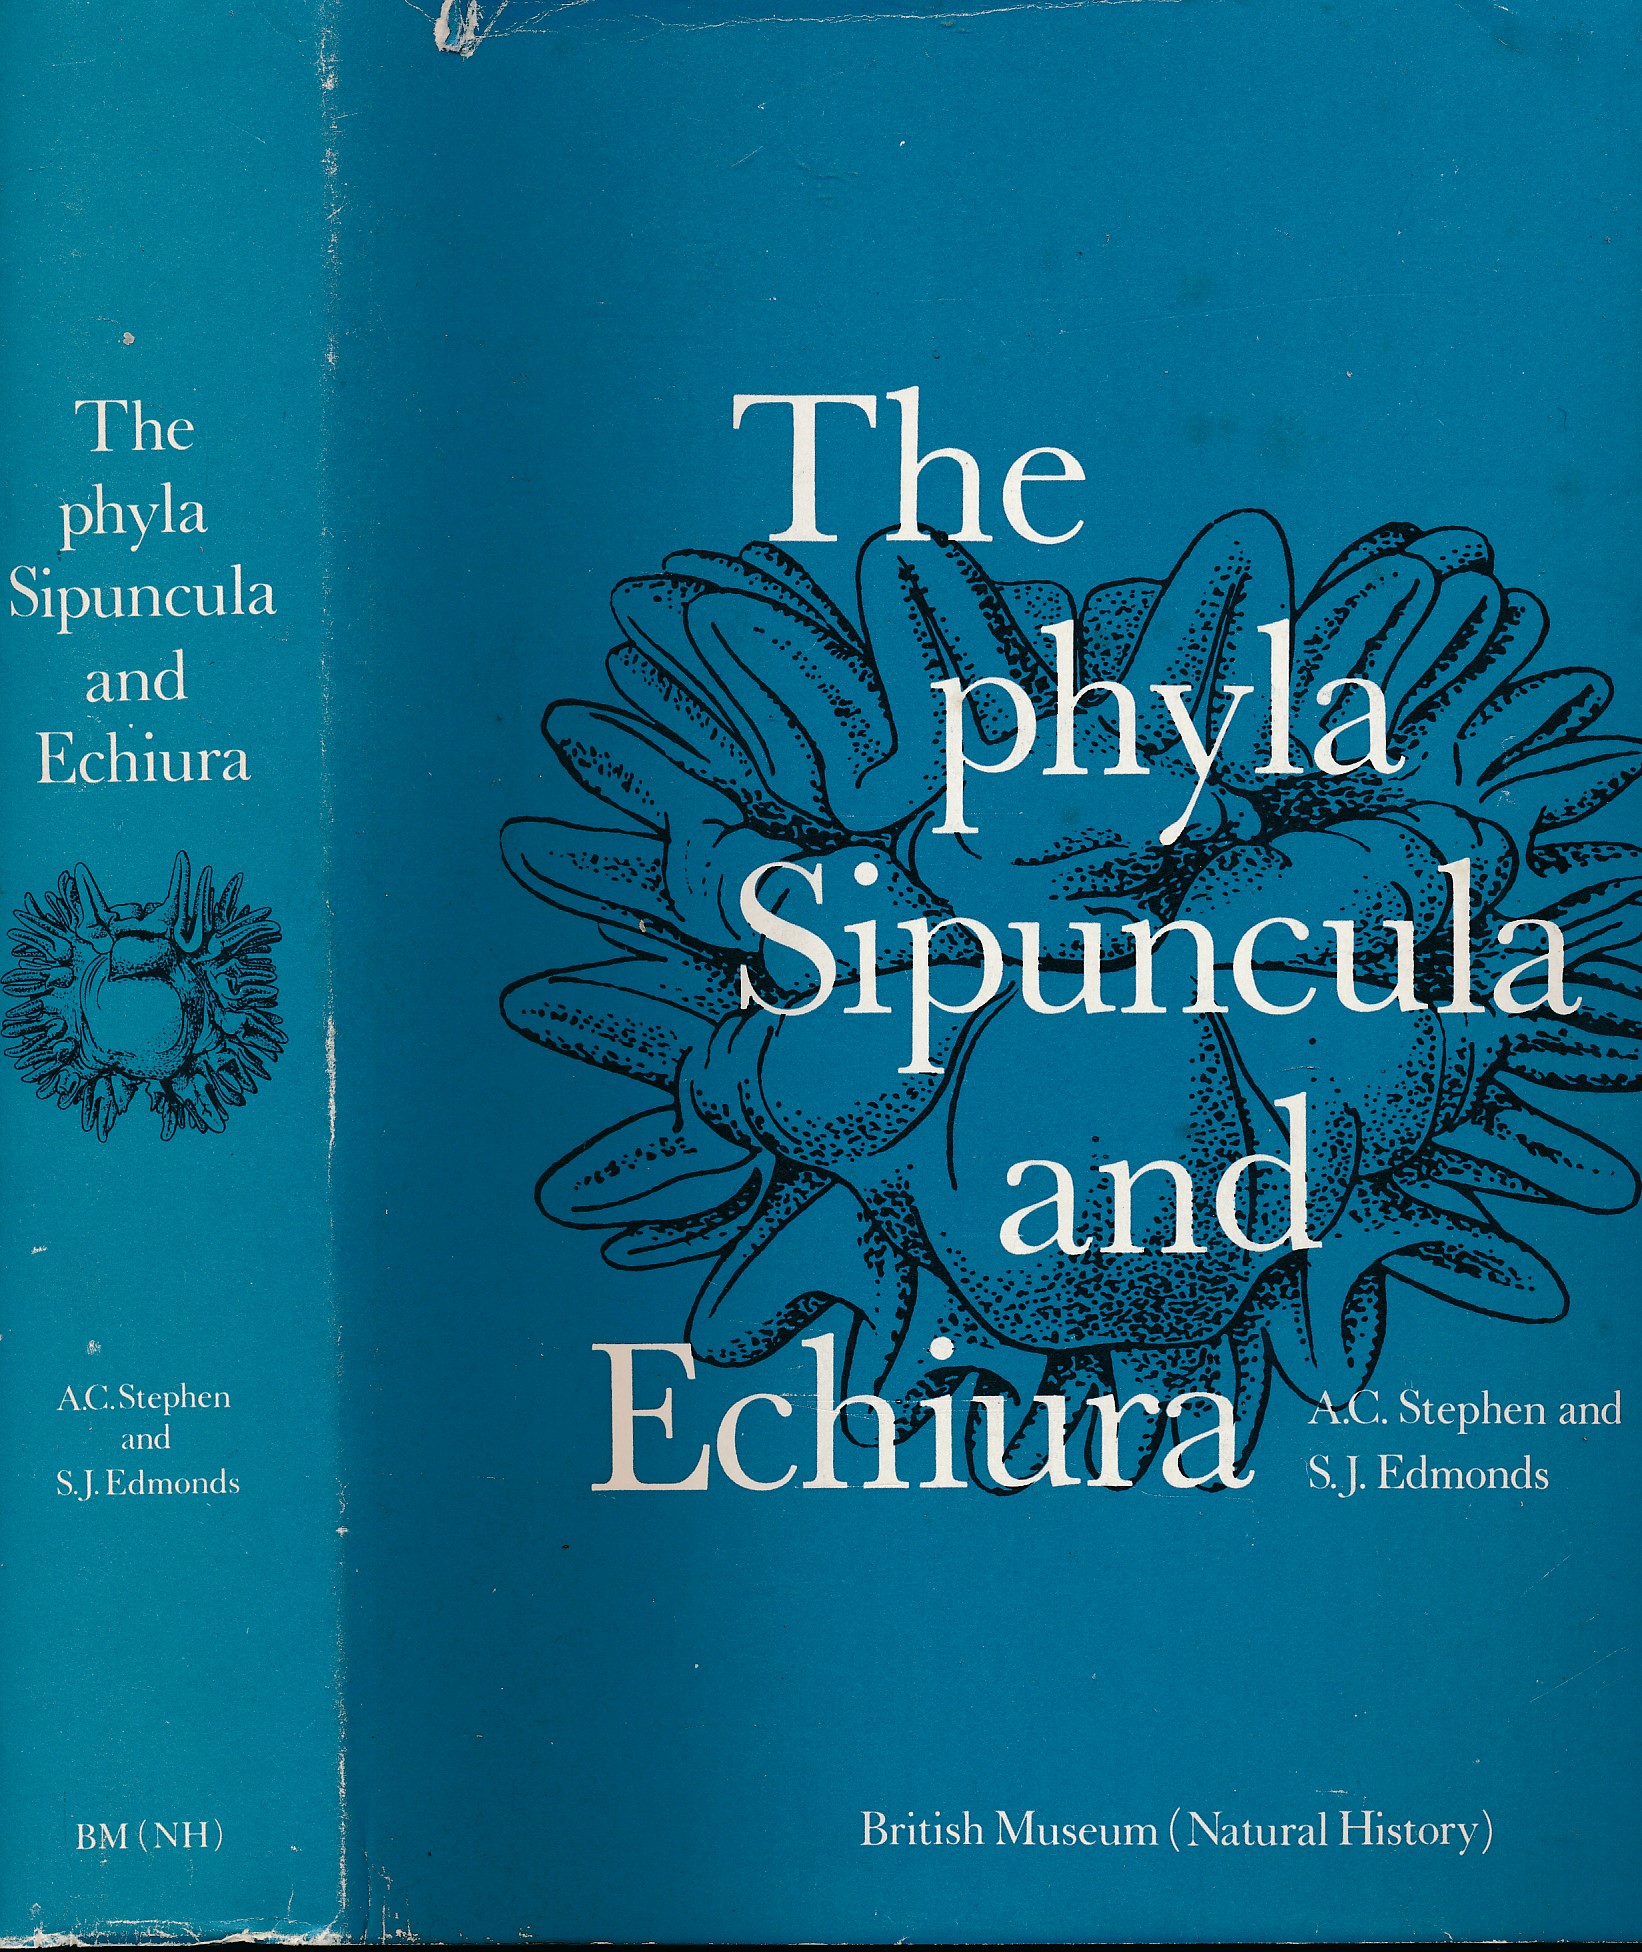 The Phyla Sipuncula and Echiura